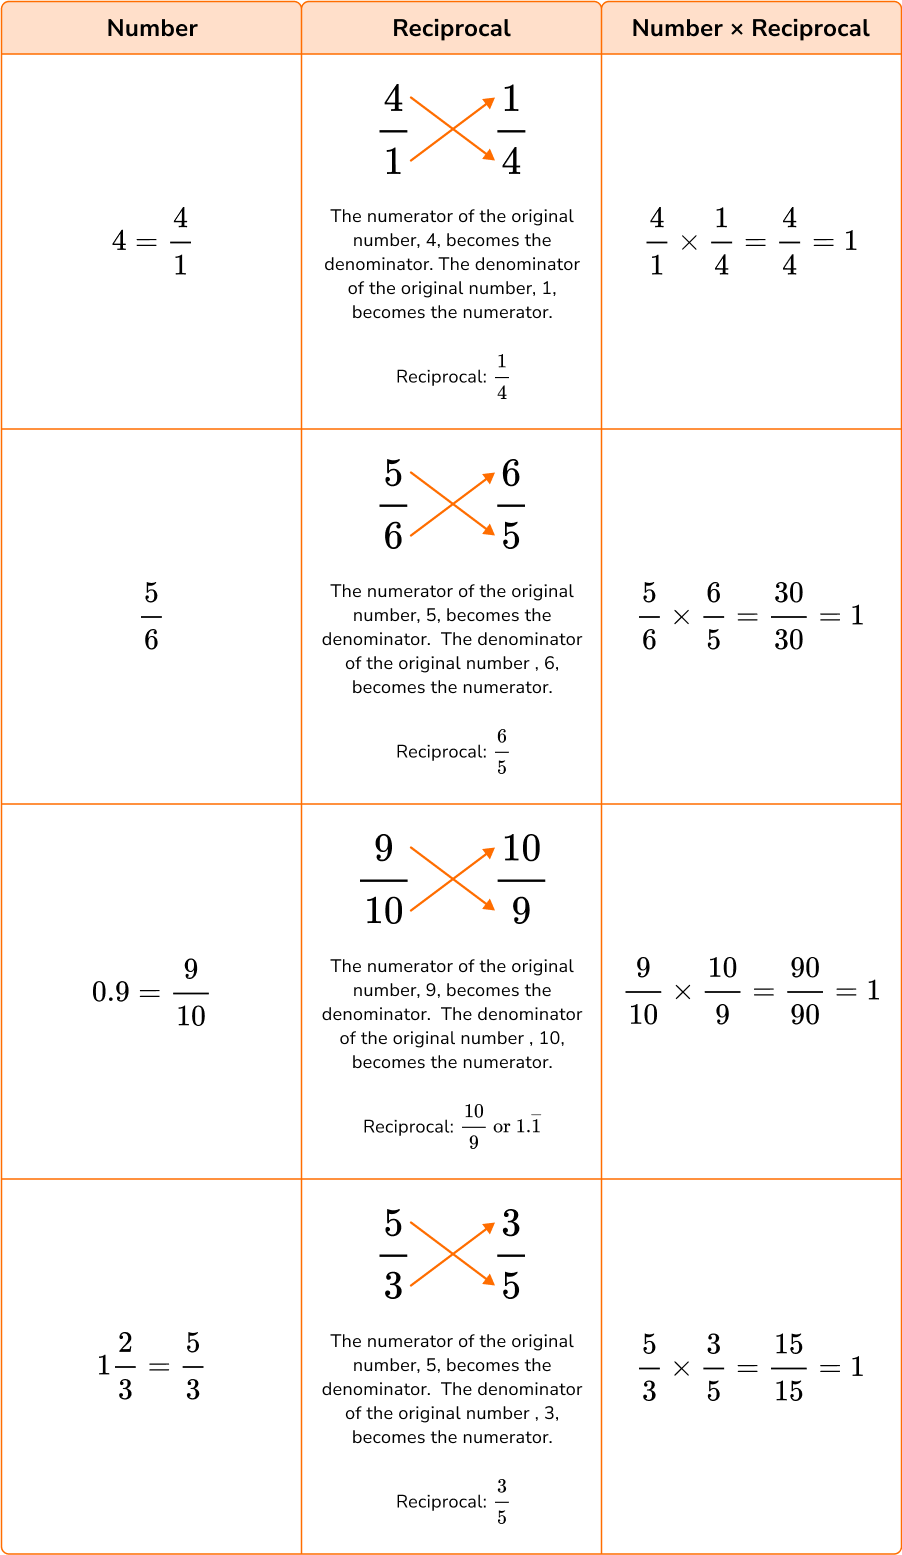 US reciprocal math image 2.1